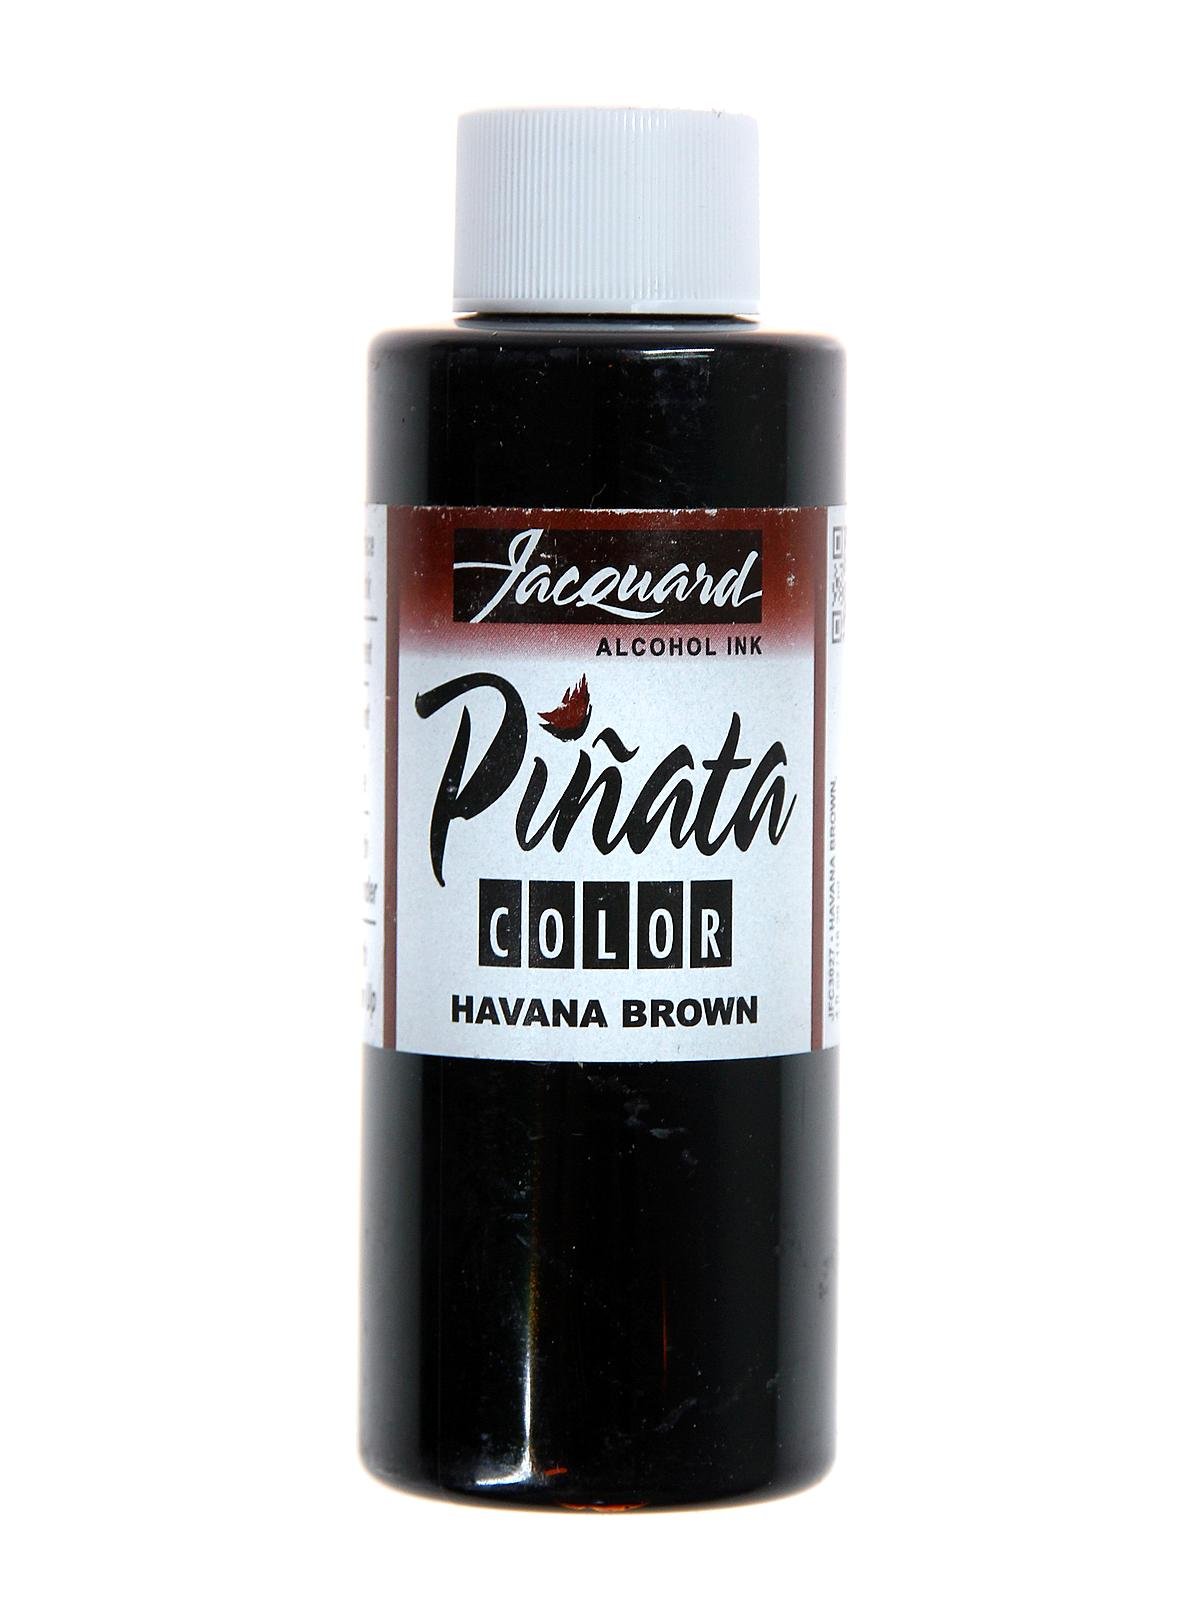 Jacquard Pinata Alcohol Ink #034 Copper 4oz - The Art Store